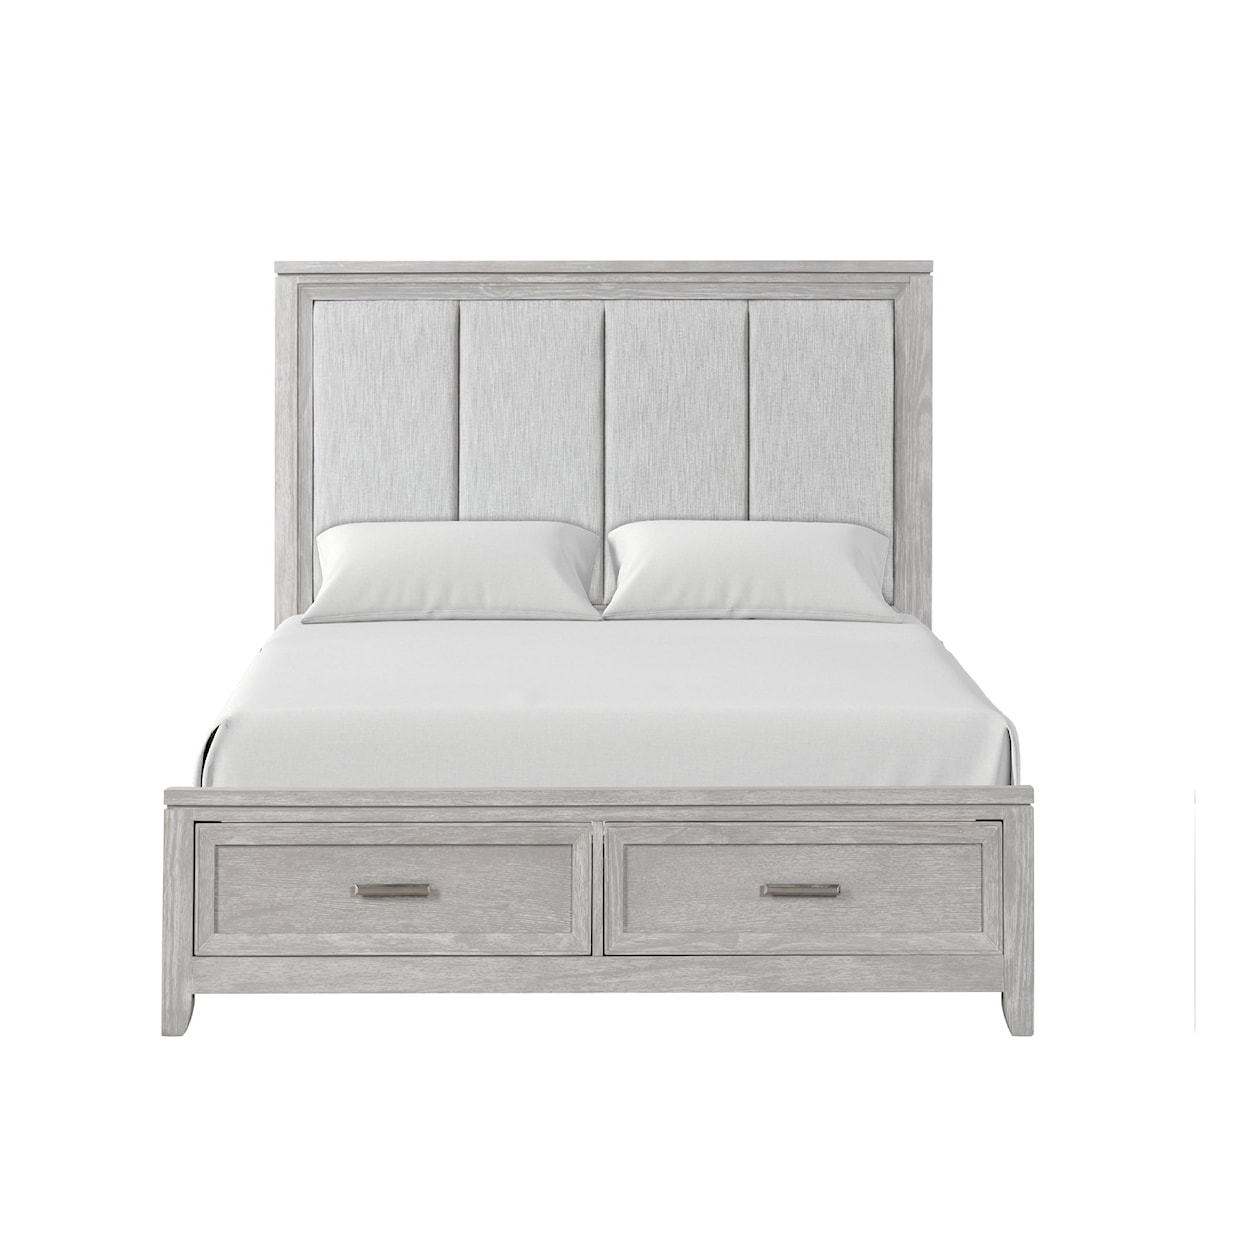 New Classic Fiona Queen Bed